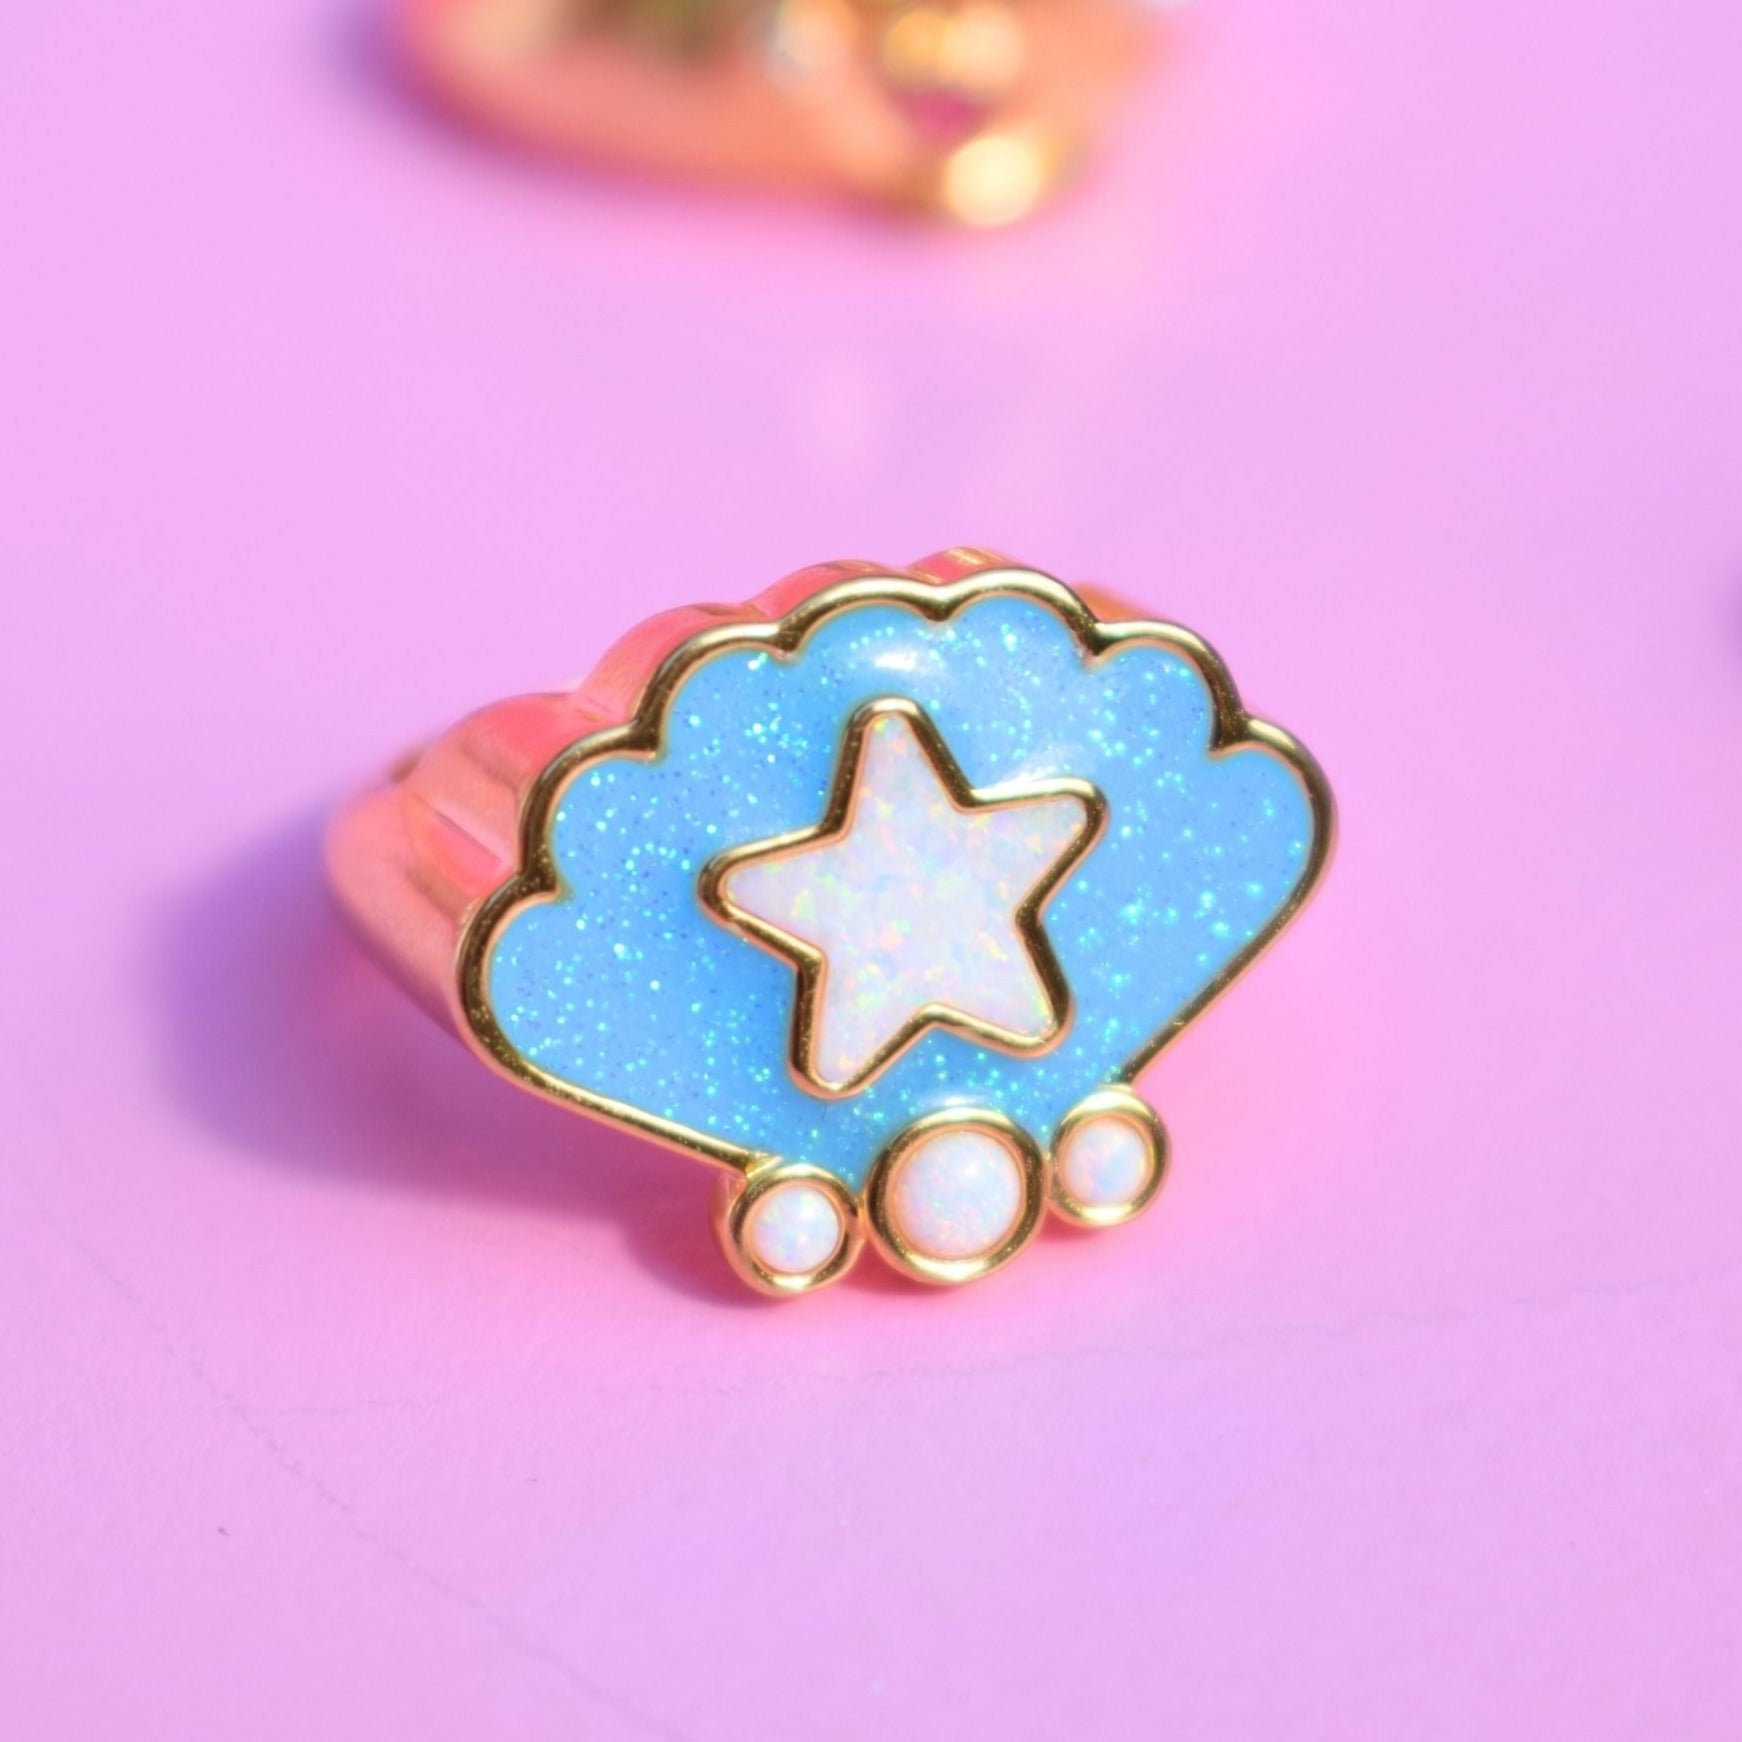 Blue Sea Star Ring